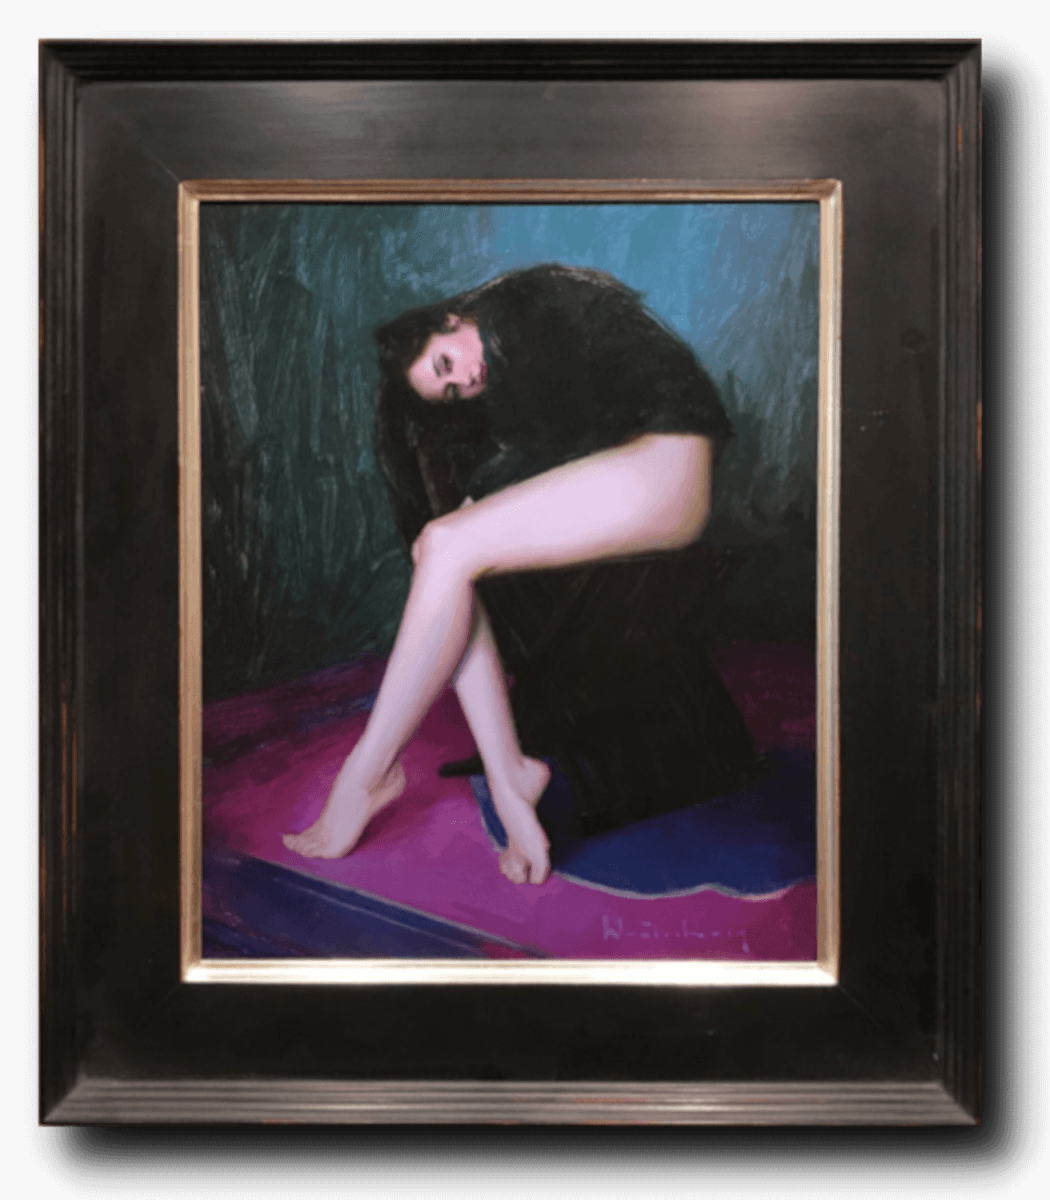 Seated In Black Fur by Aaron Westernerg at LePrince Galleries